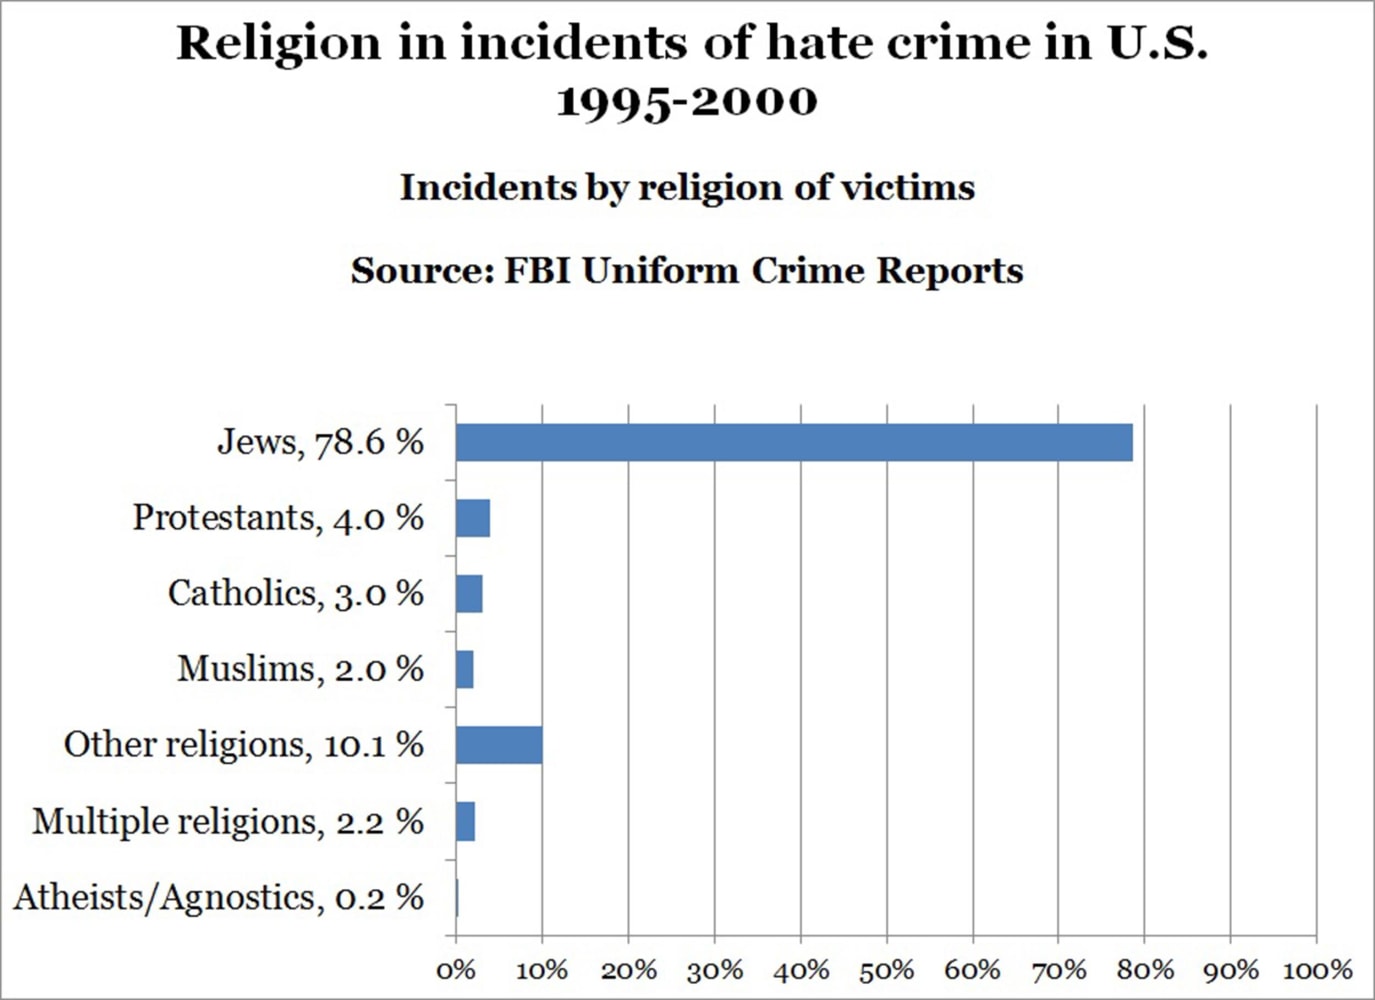 http://media4.s-nbcnews.com/j/newscms/2014_16/326431/140415-hate-crimes-by-religion1-2301_8f2eb71bfa345ac0669fad850cfd4b8d.nbcnews-ux-2880-1000.jpg